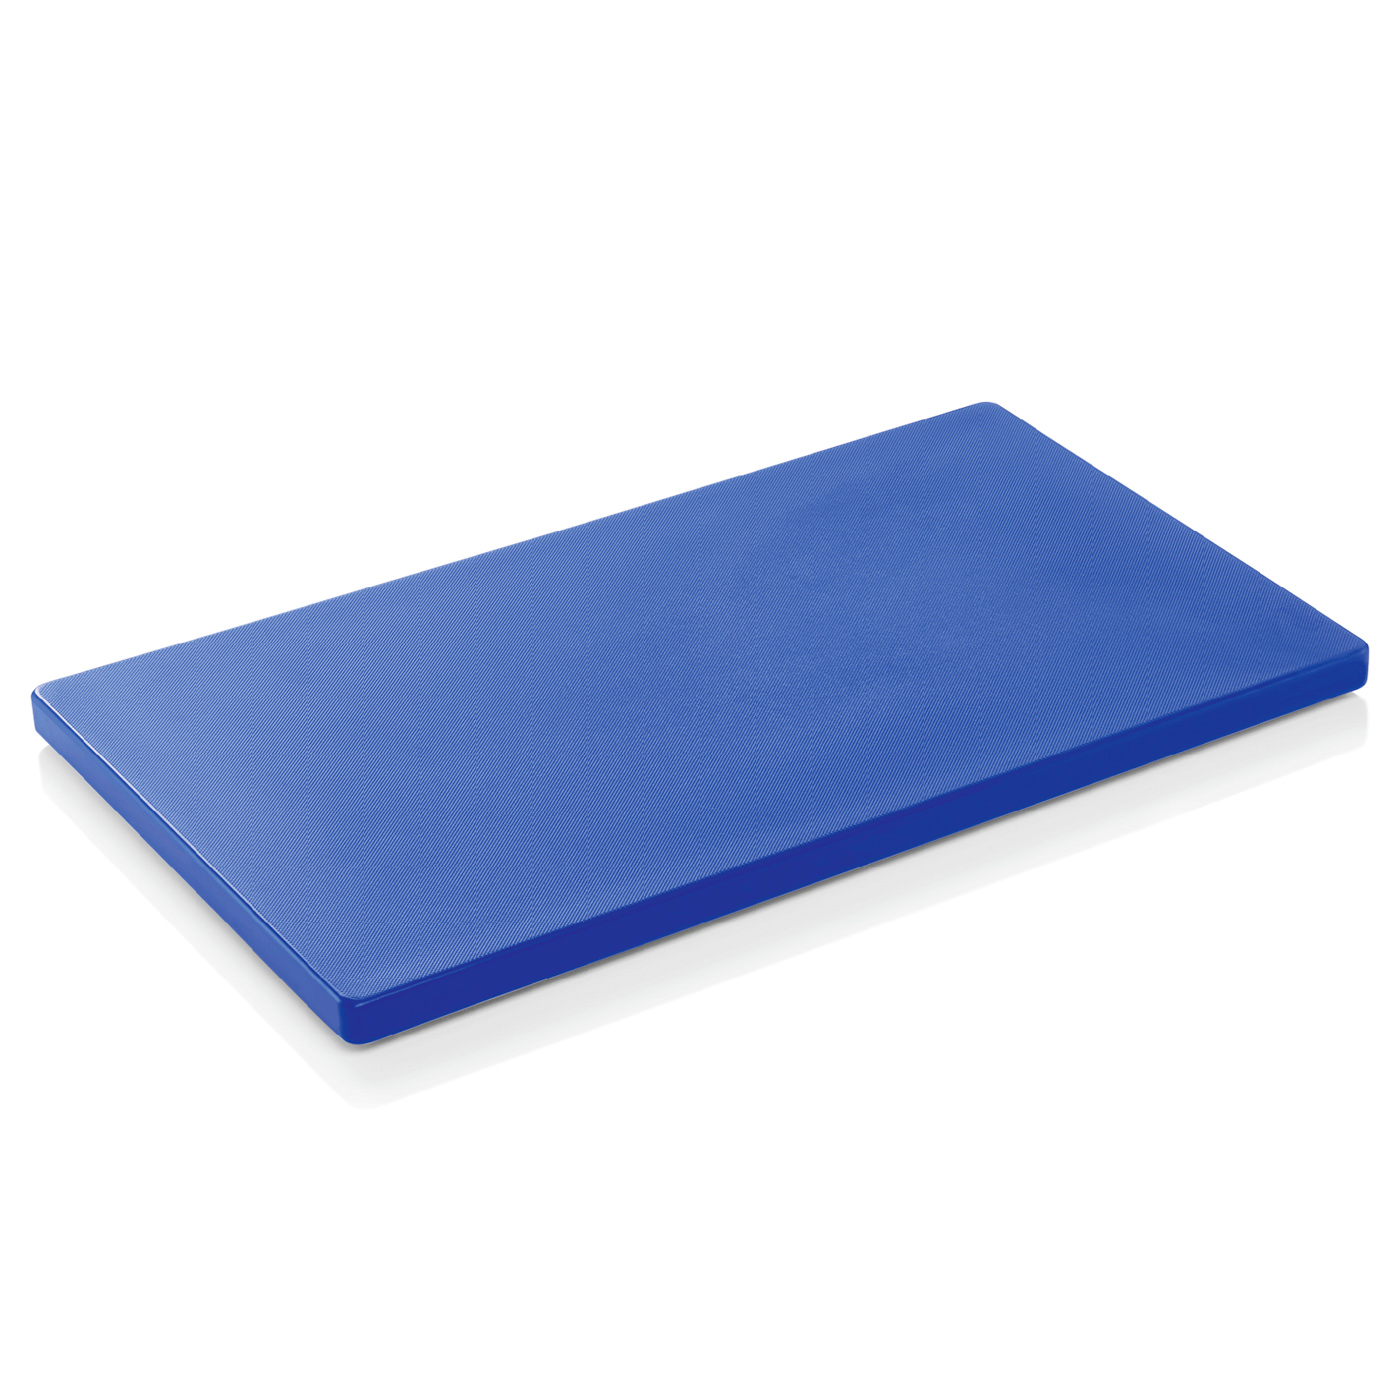 HACCP Schneidbrett, Material: Polyethylen. Farbe: blau.